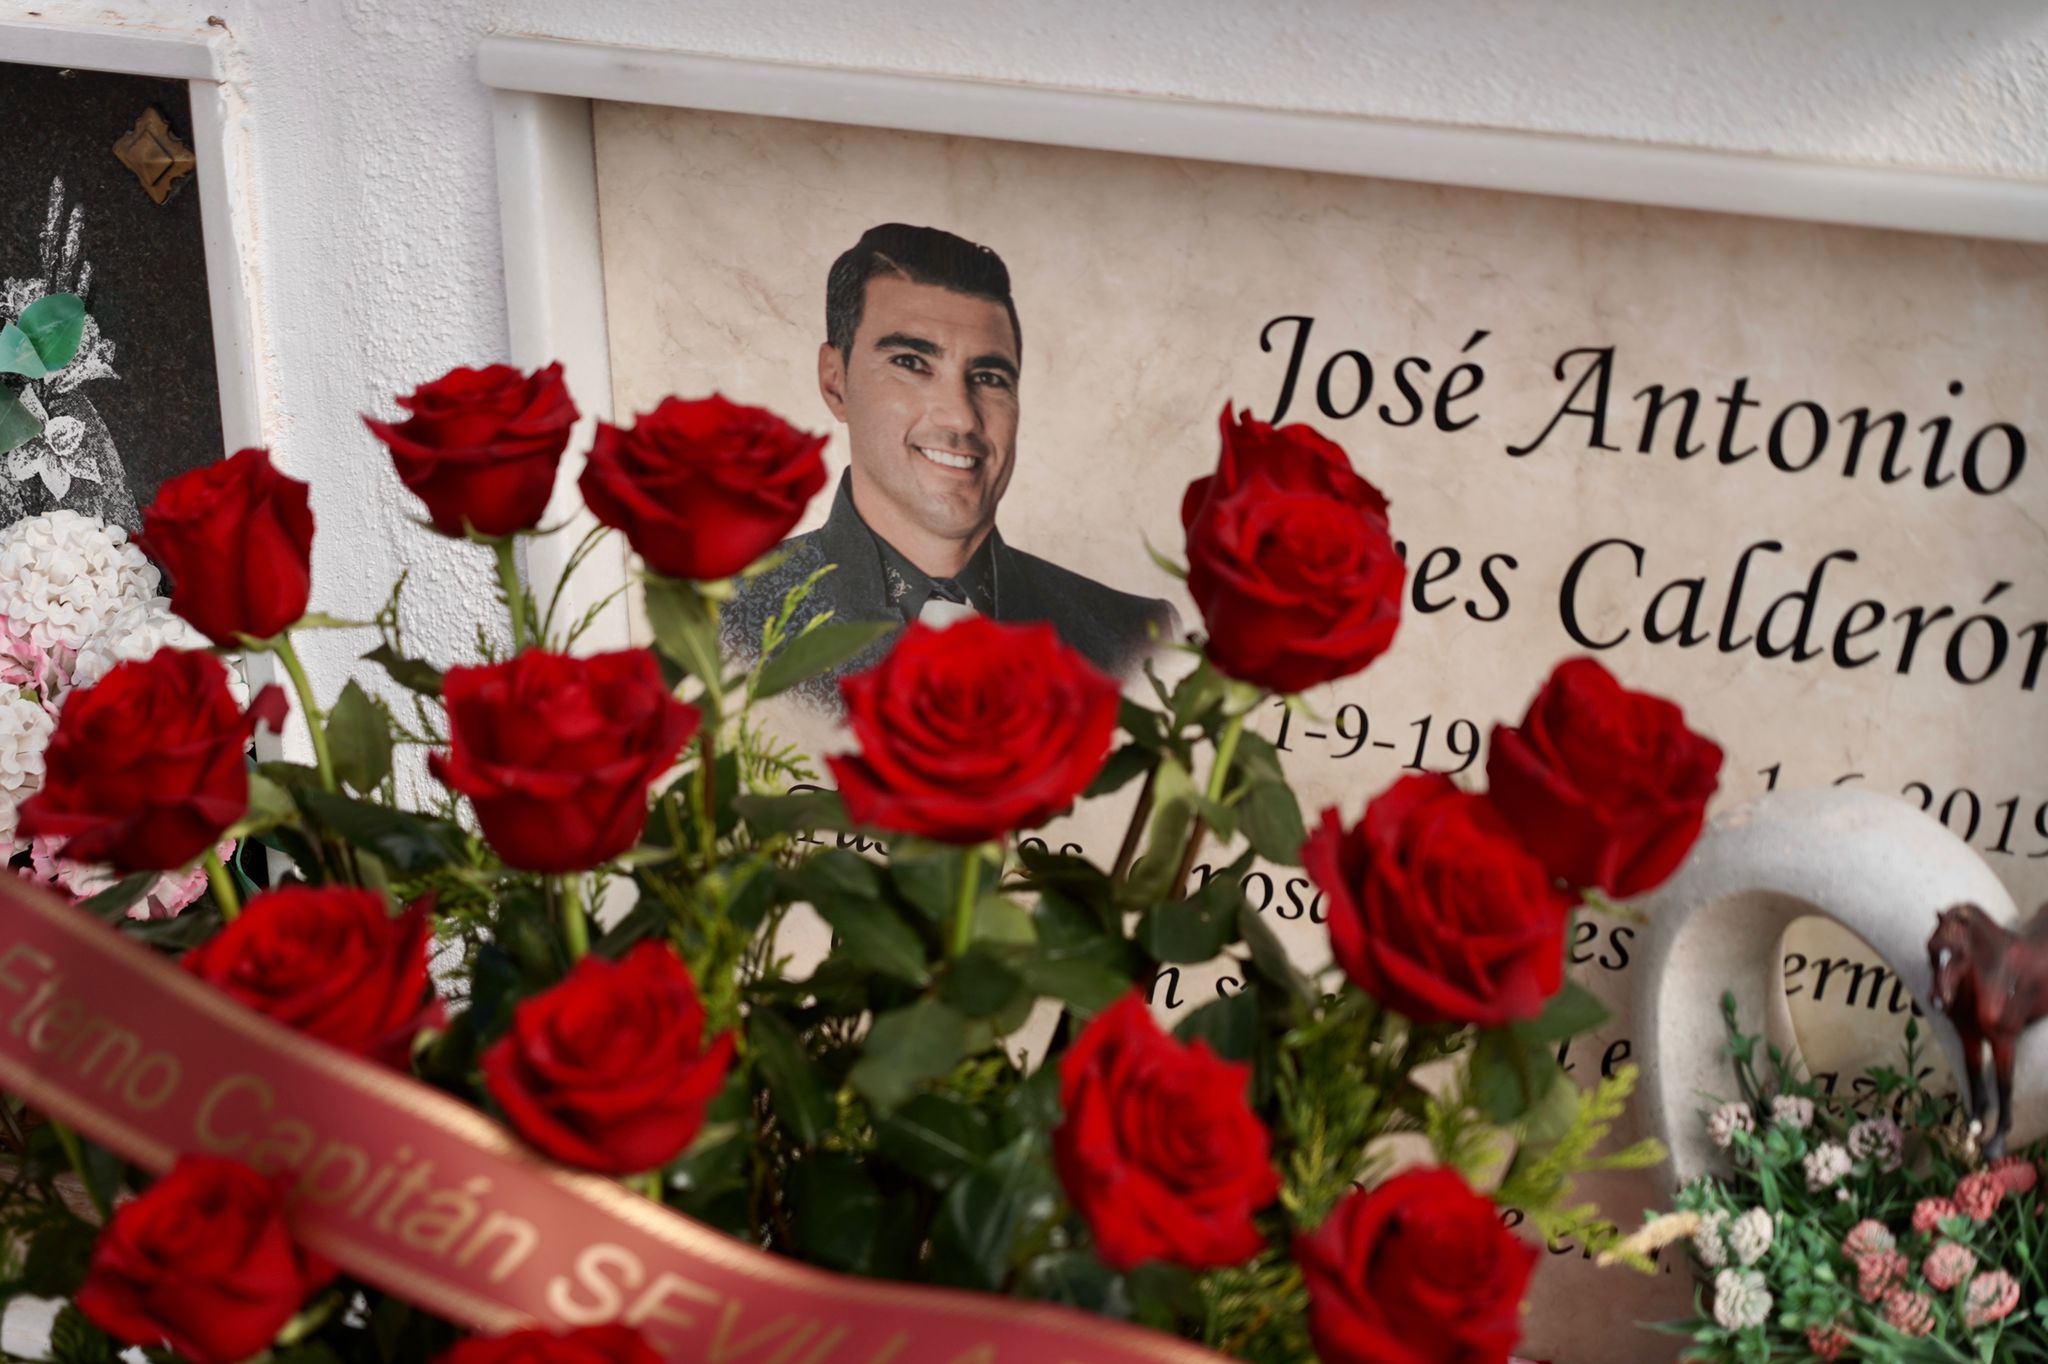 Remembering Jose Antonio Reyes, Feature, News